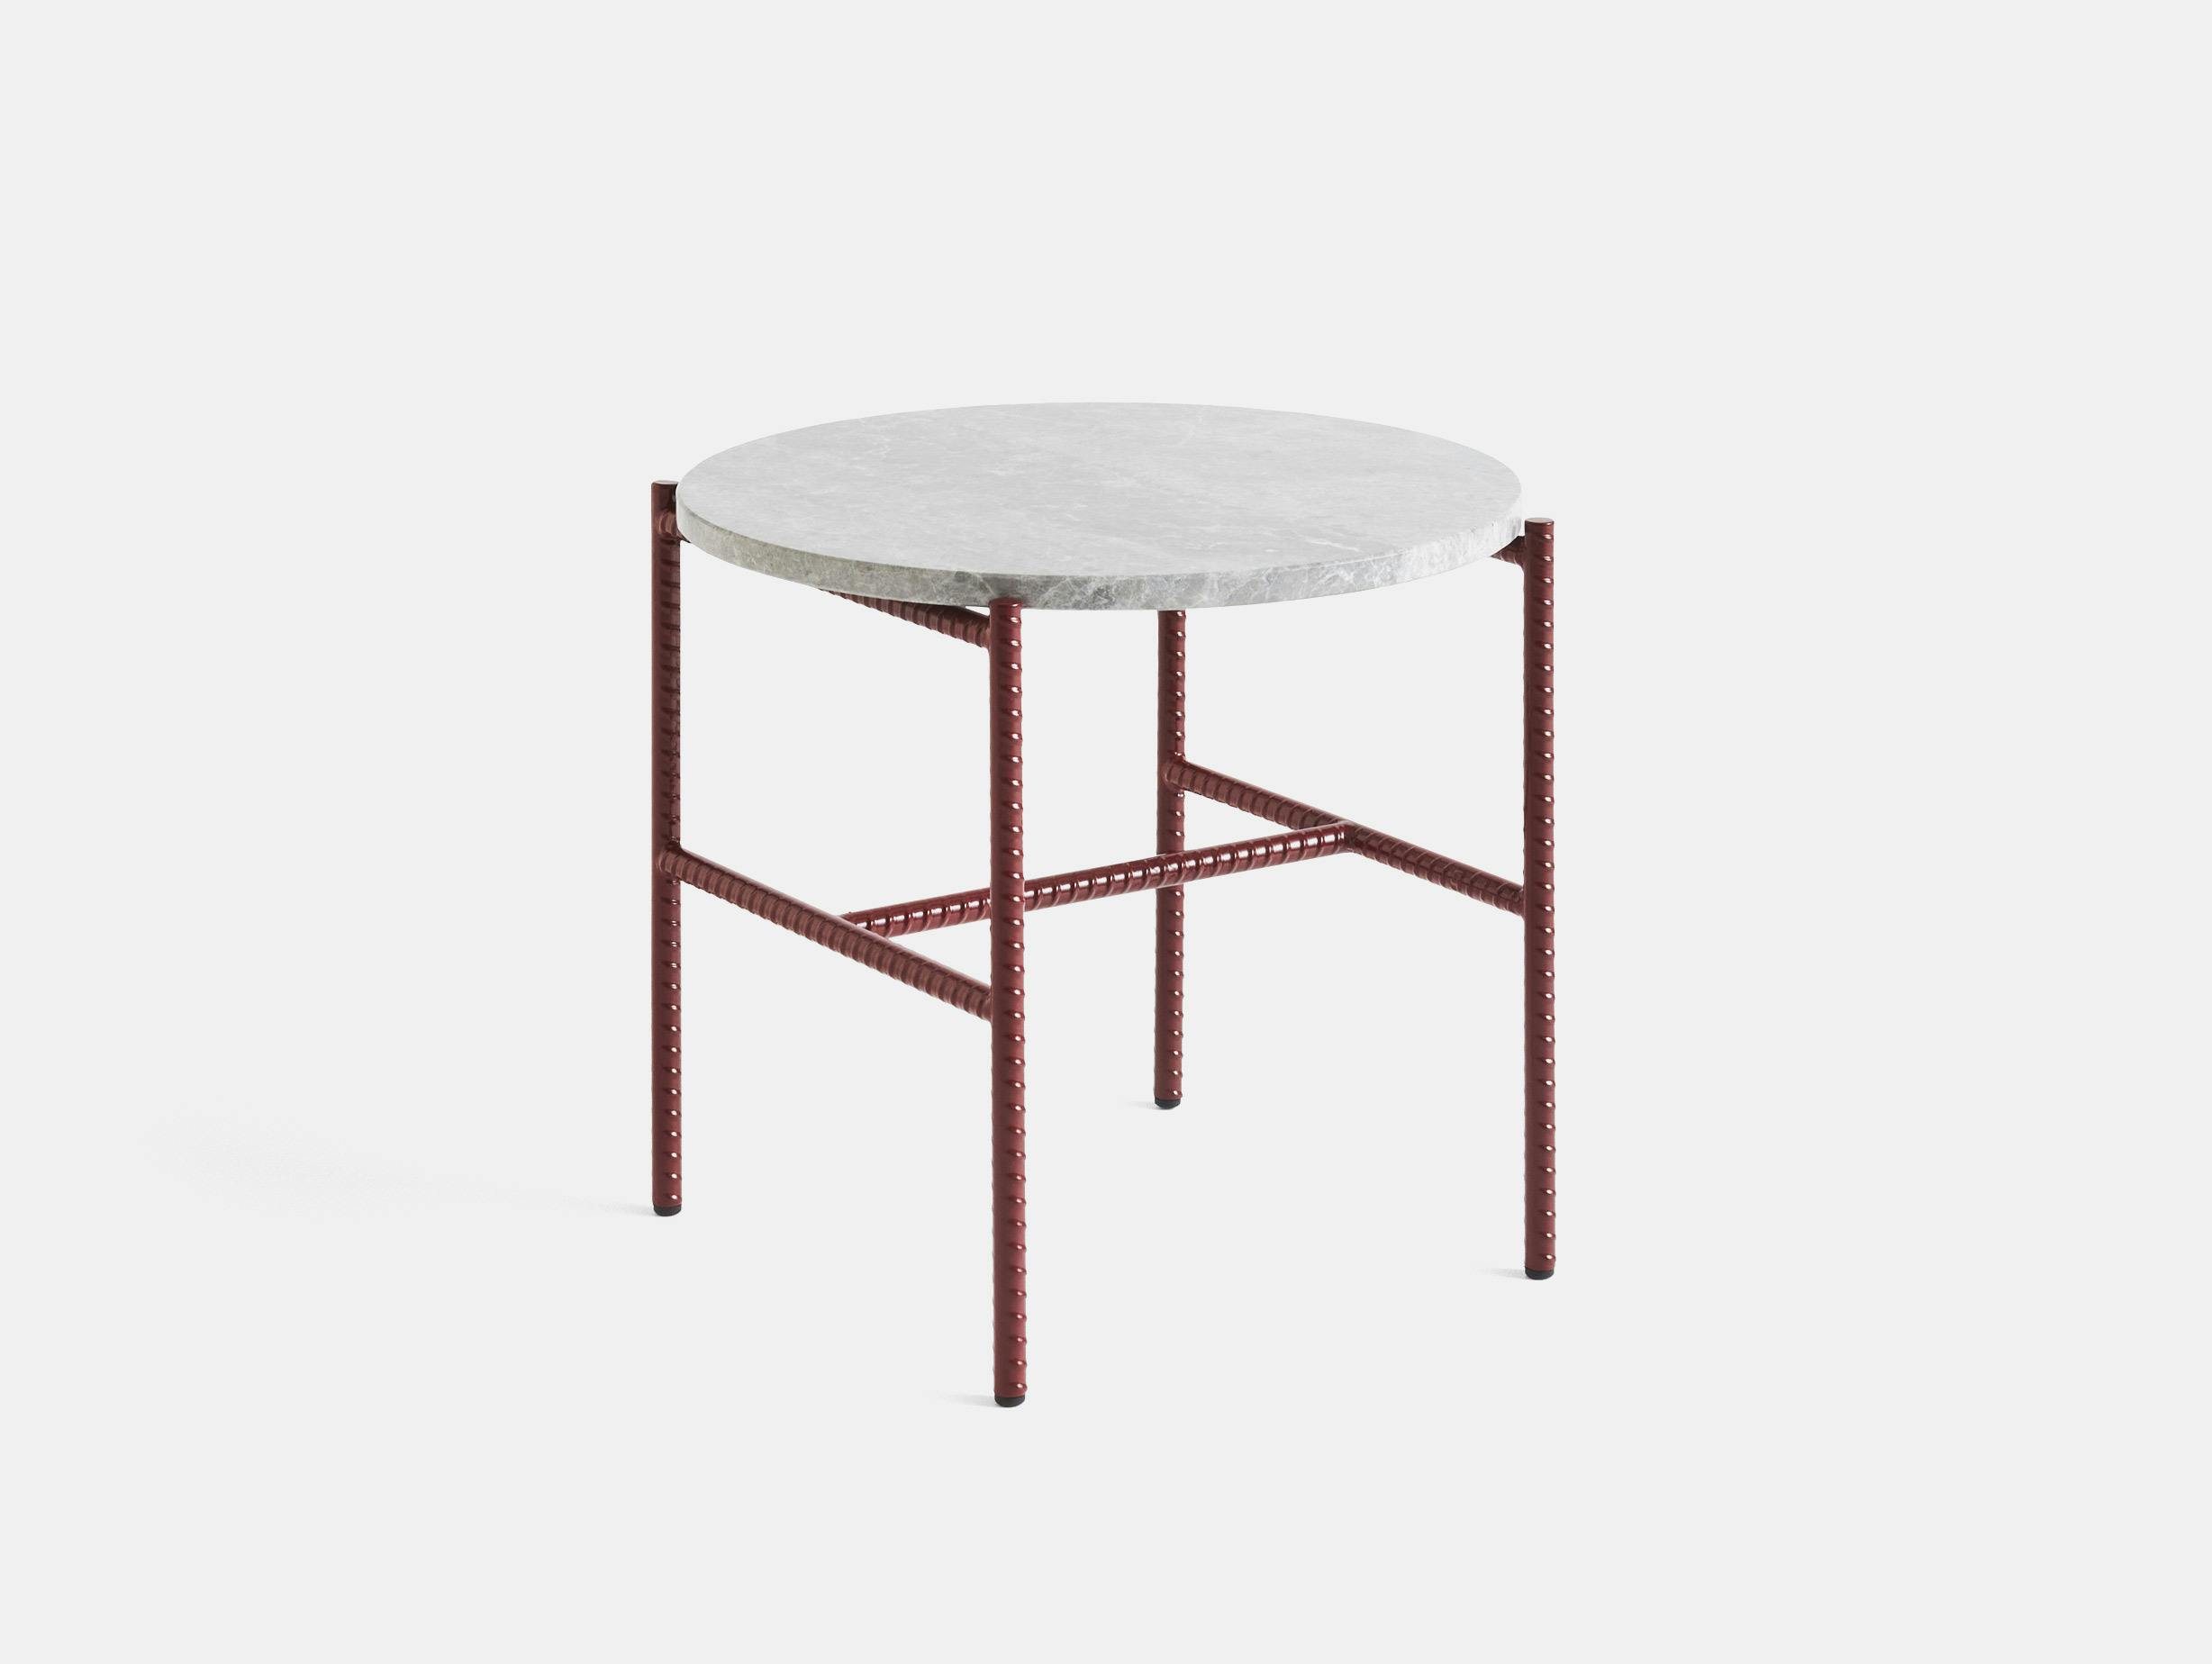 Hay sylvain willenz rebar side table round brick red grey marble